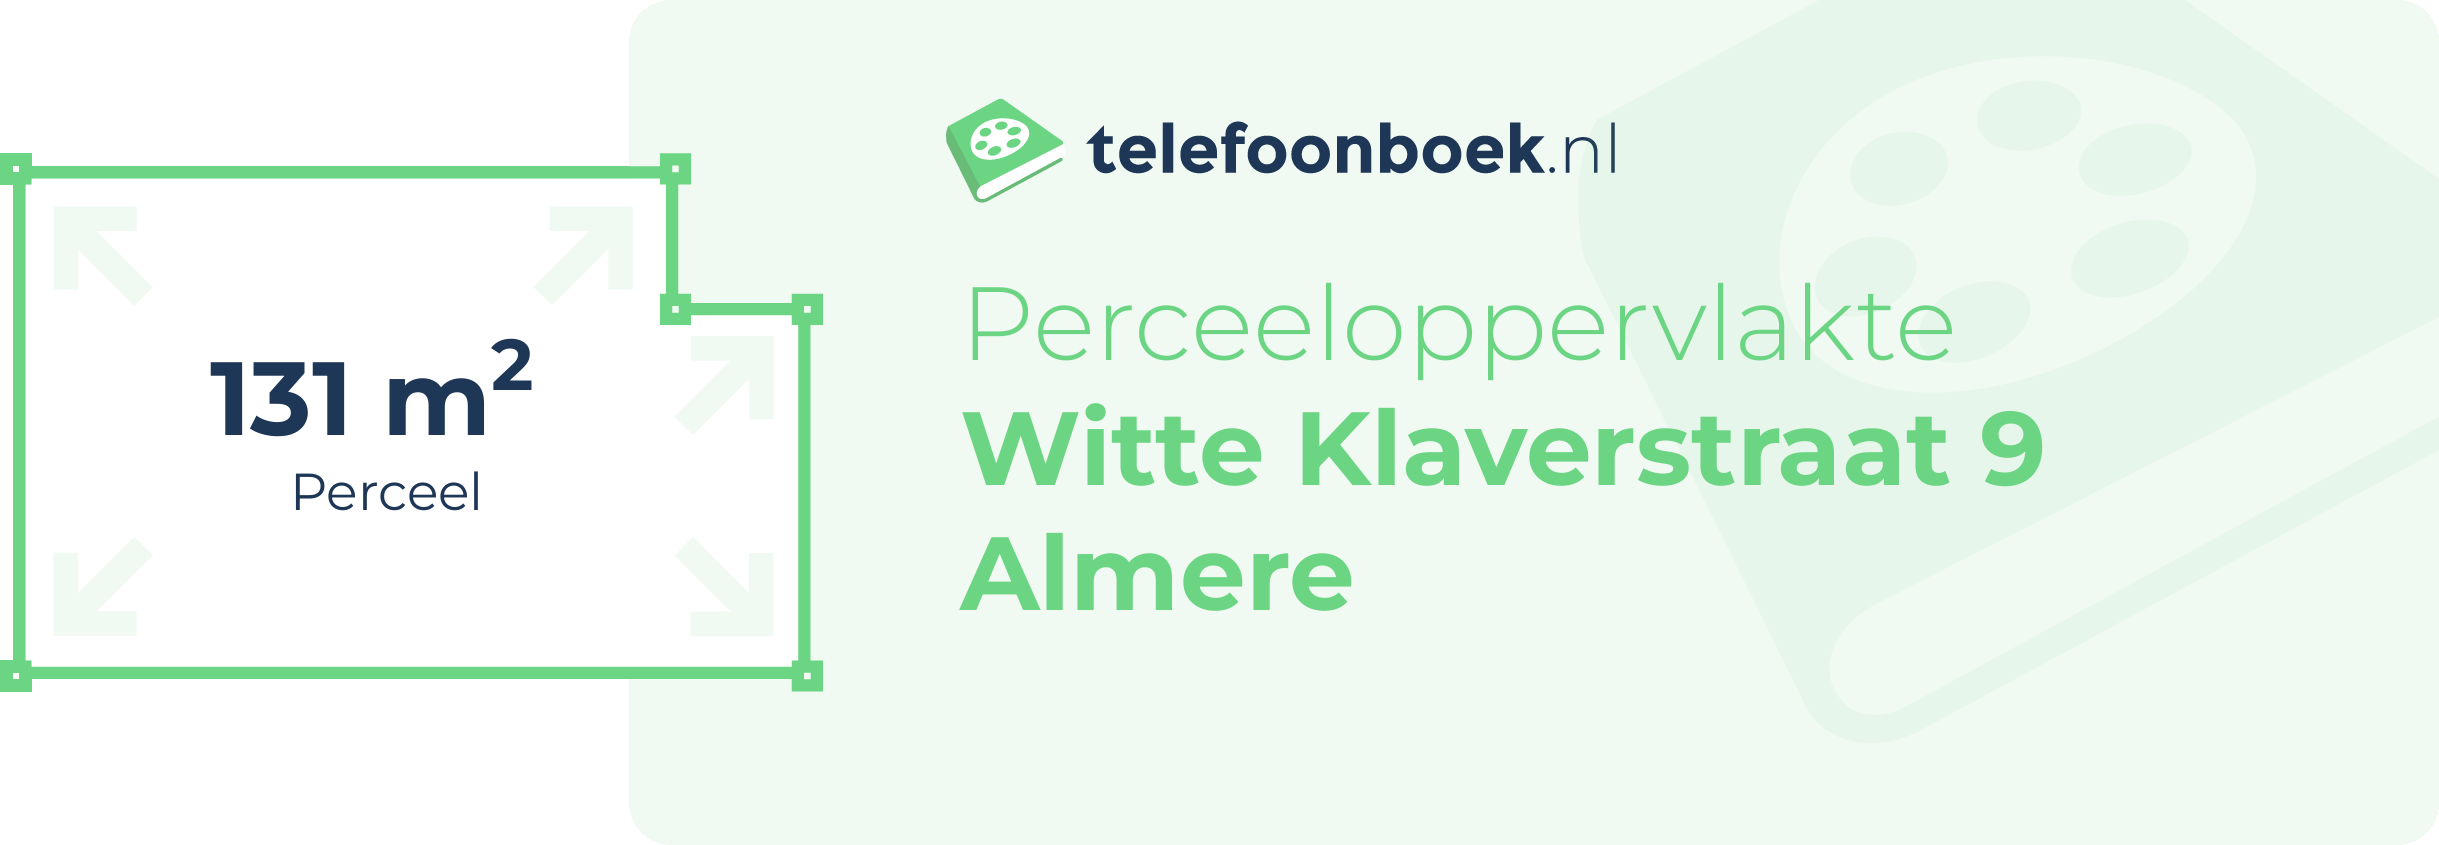 Perceeloppervlakte Witte Klaverstraat 9 Almere